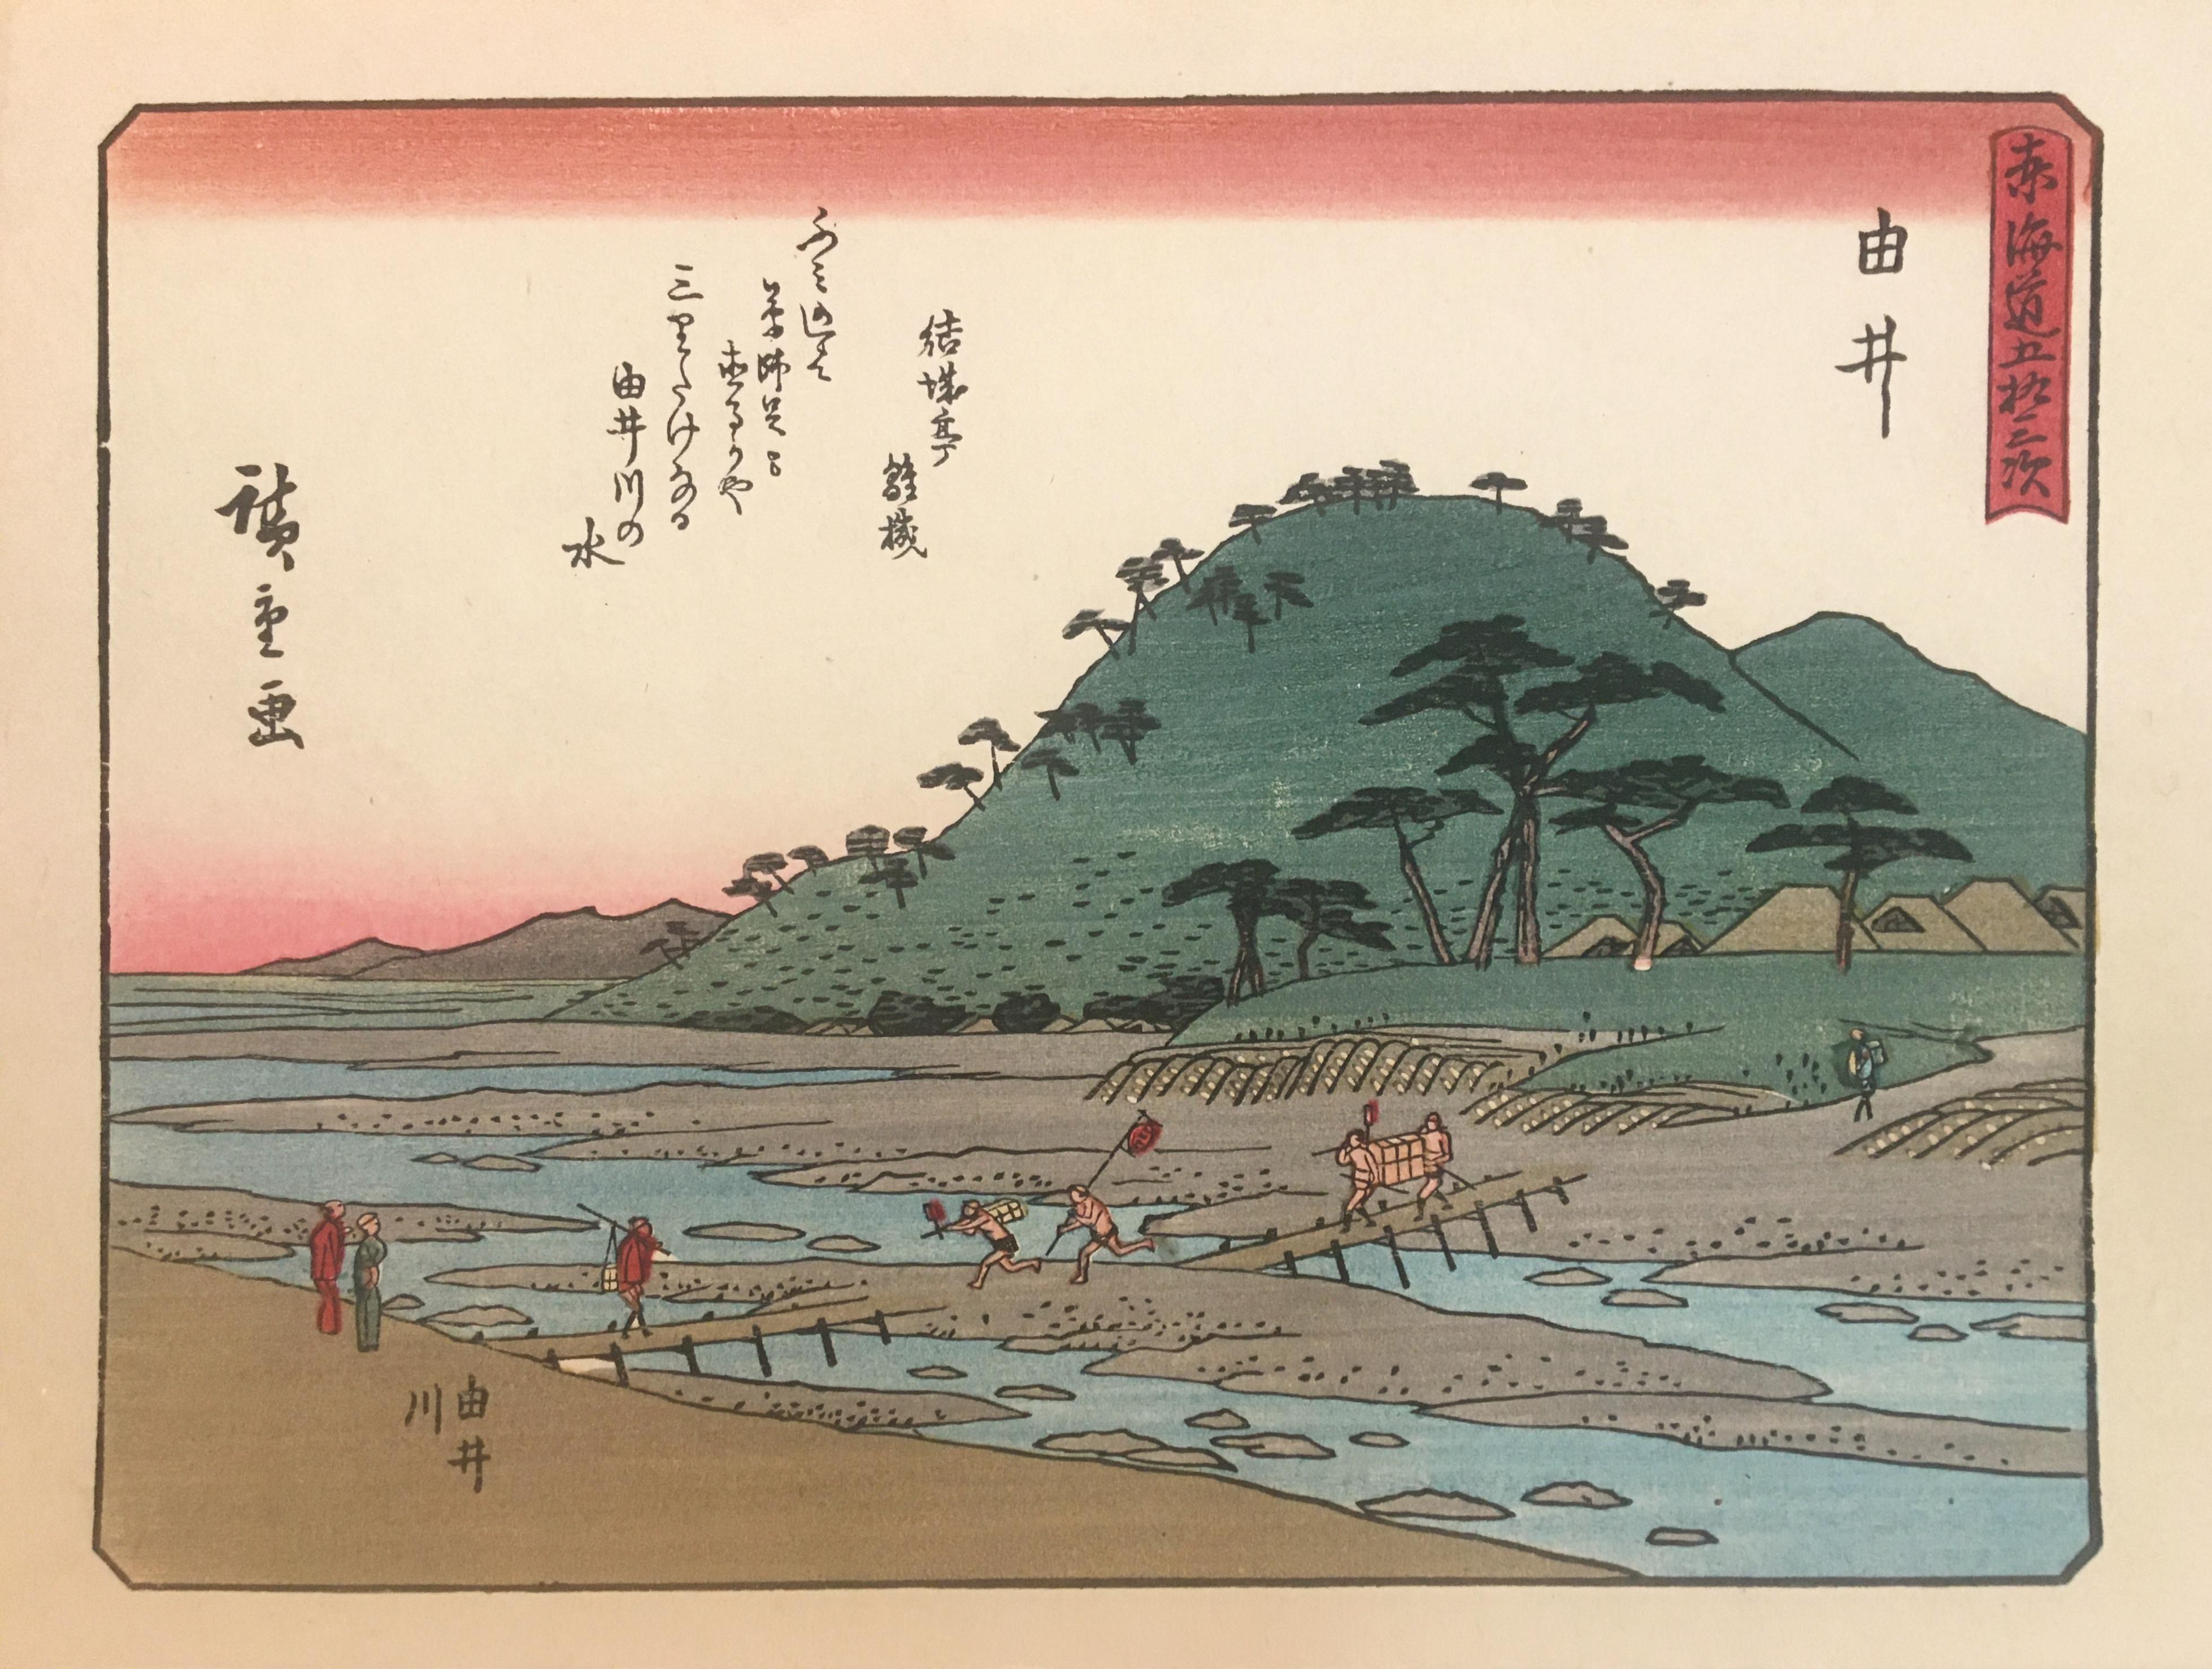 Utagawa Hiroshige (Ando Hiroshige) Landscape Print - 'View of Yui', After Utagawa Hiroshige, Ukiyo-E Woodblock, Tokaido, Edo